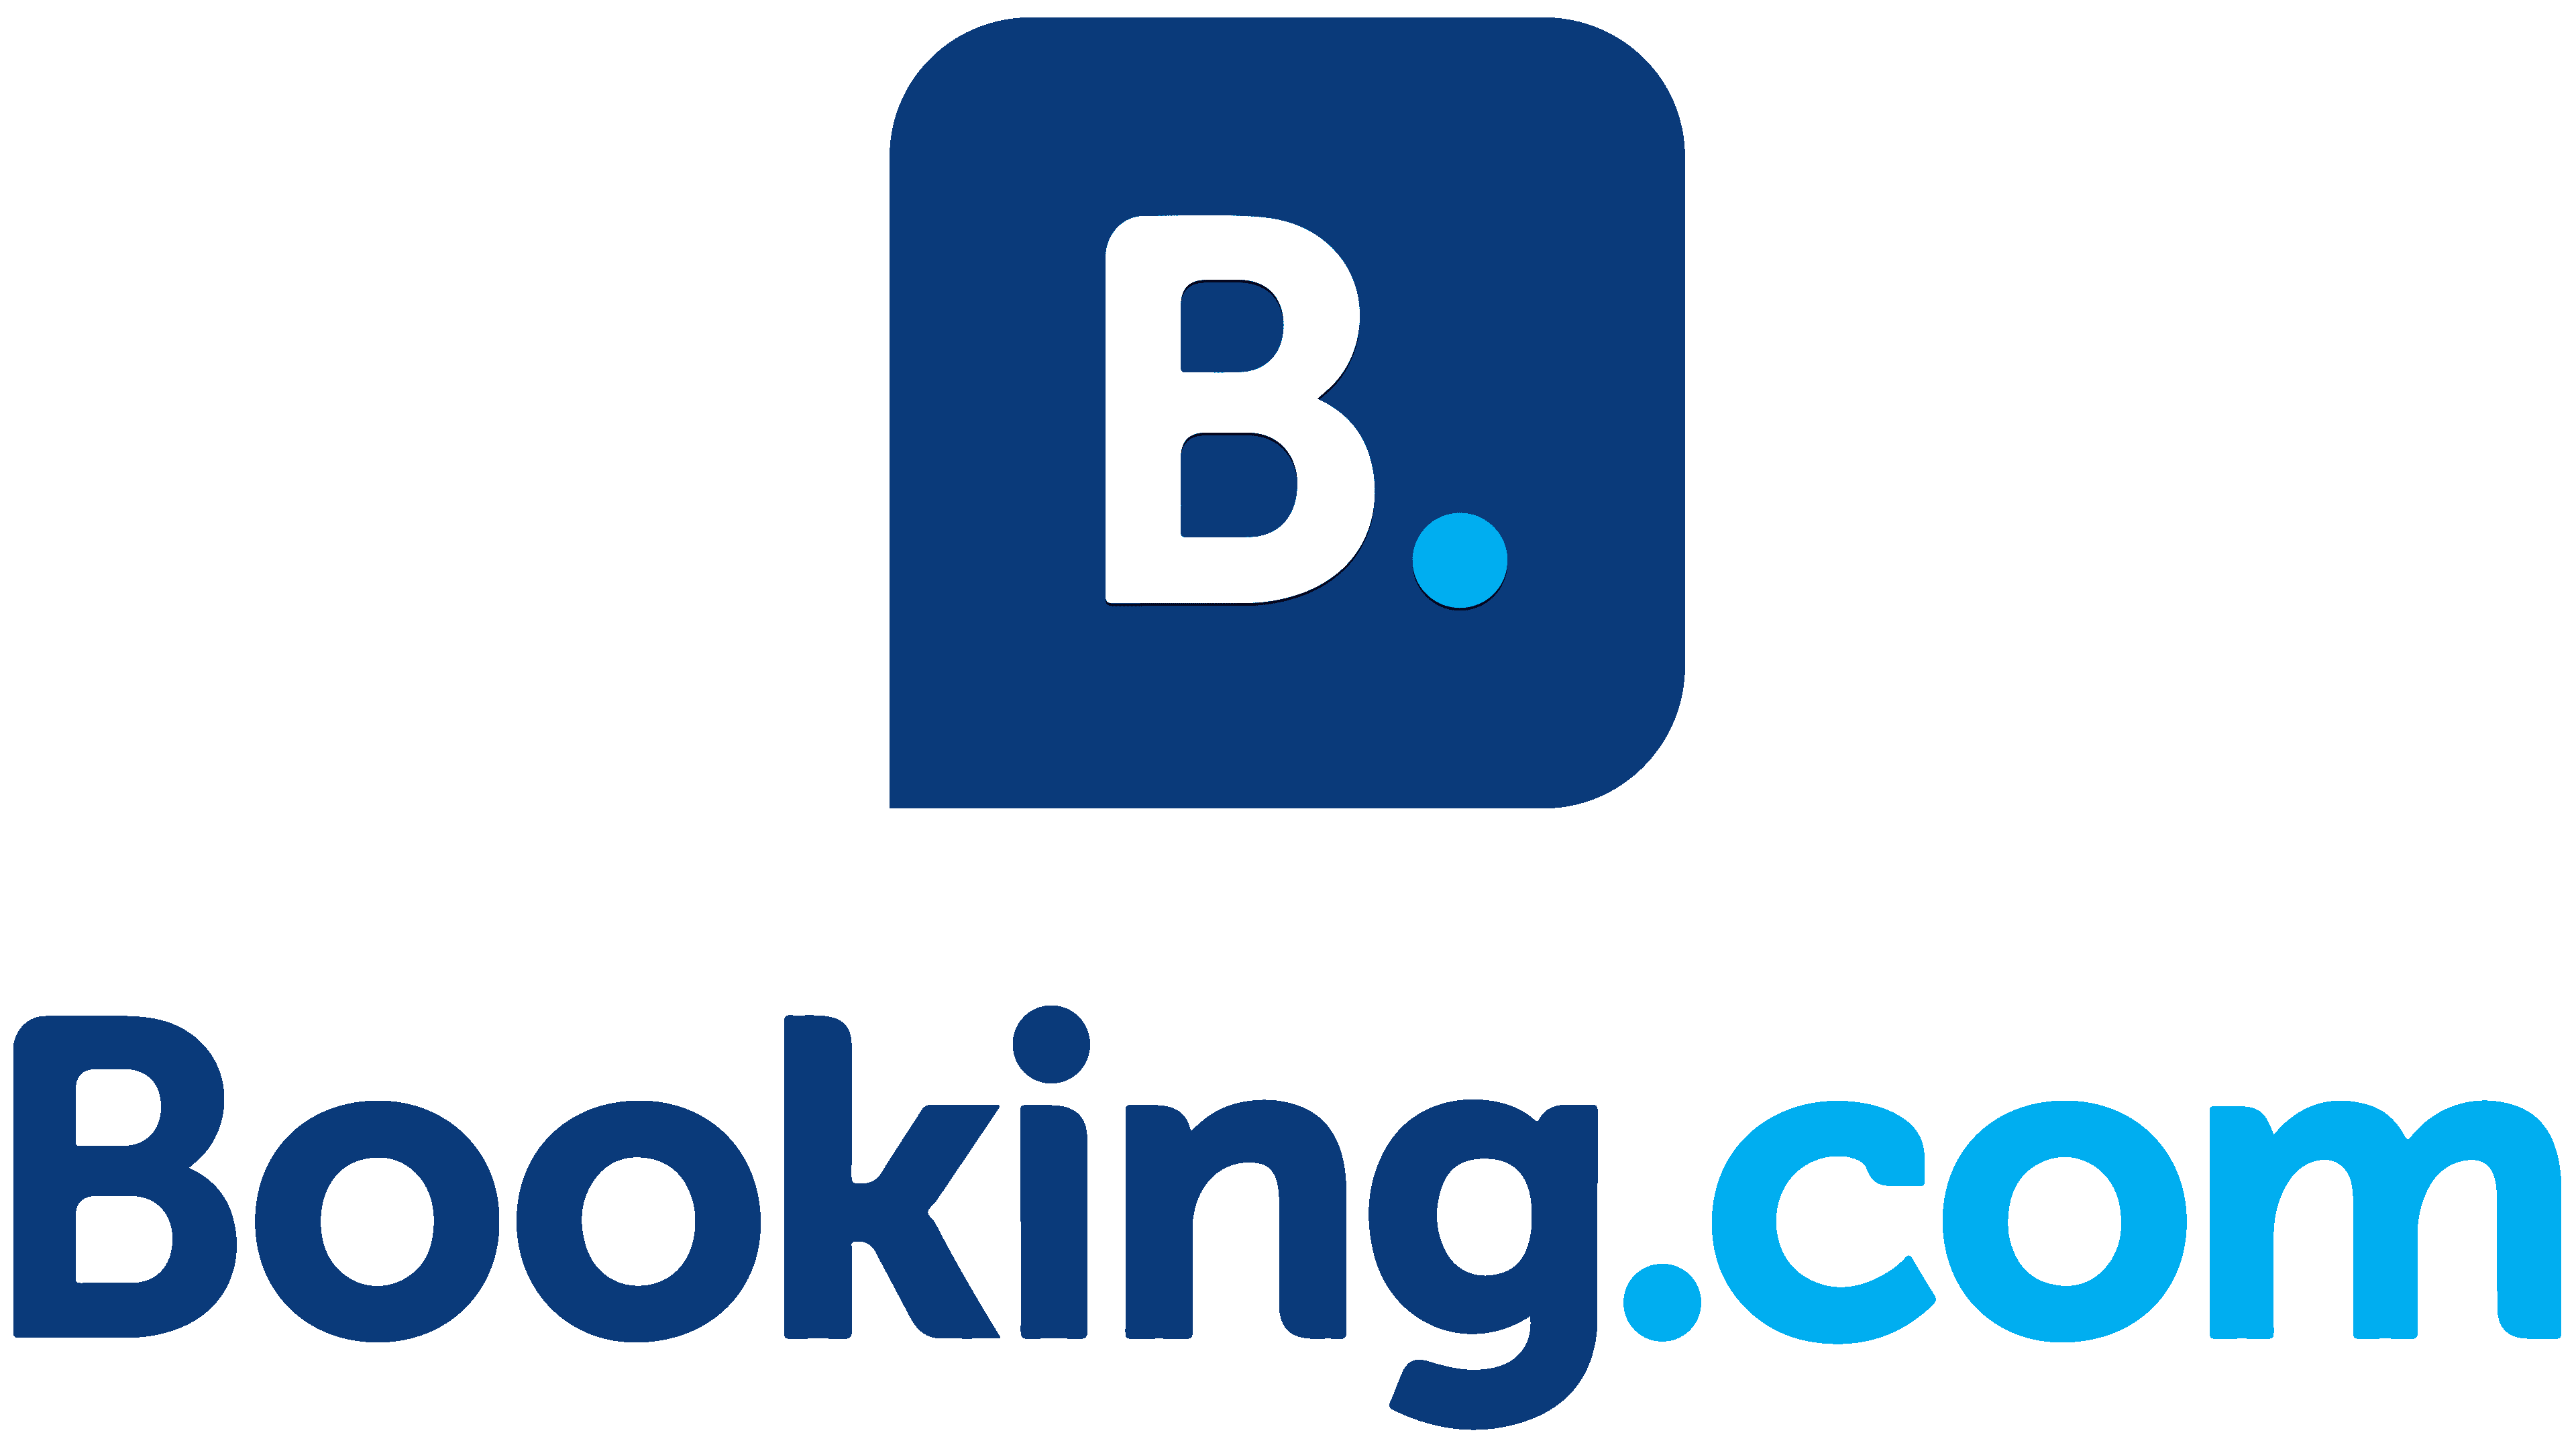 Icon booking. Booking логотип. Значок букинг. Booking.com логотип. Bauking.